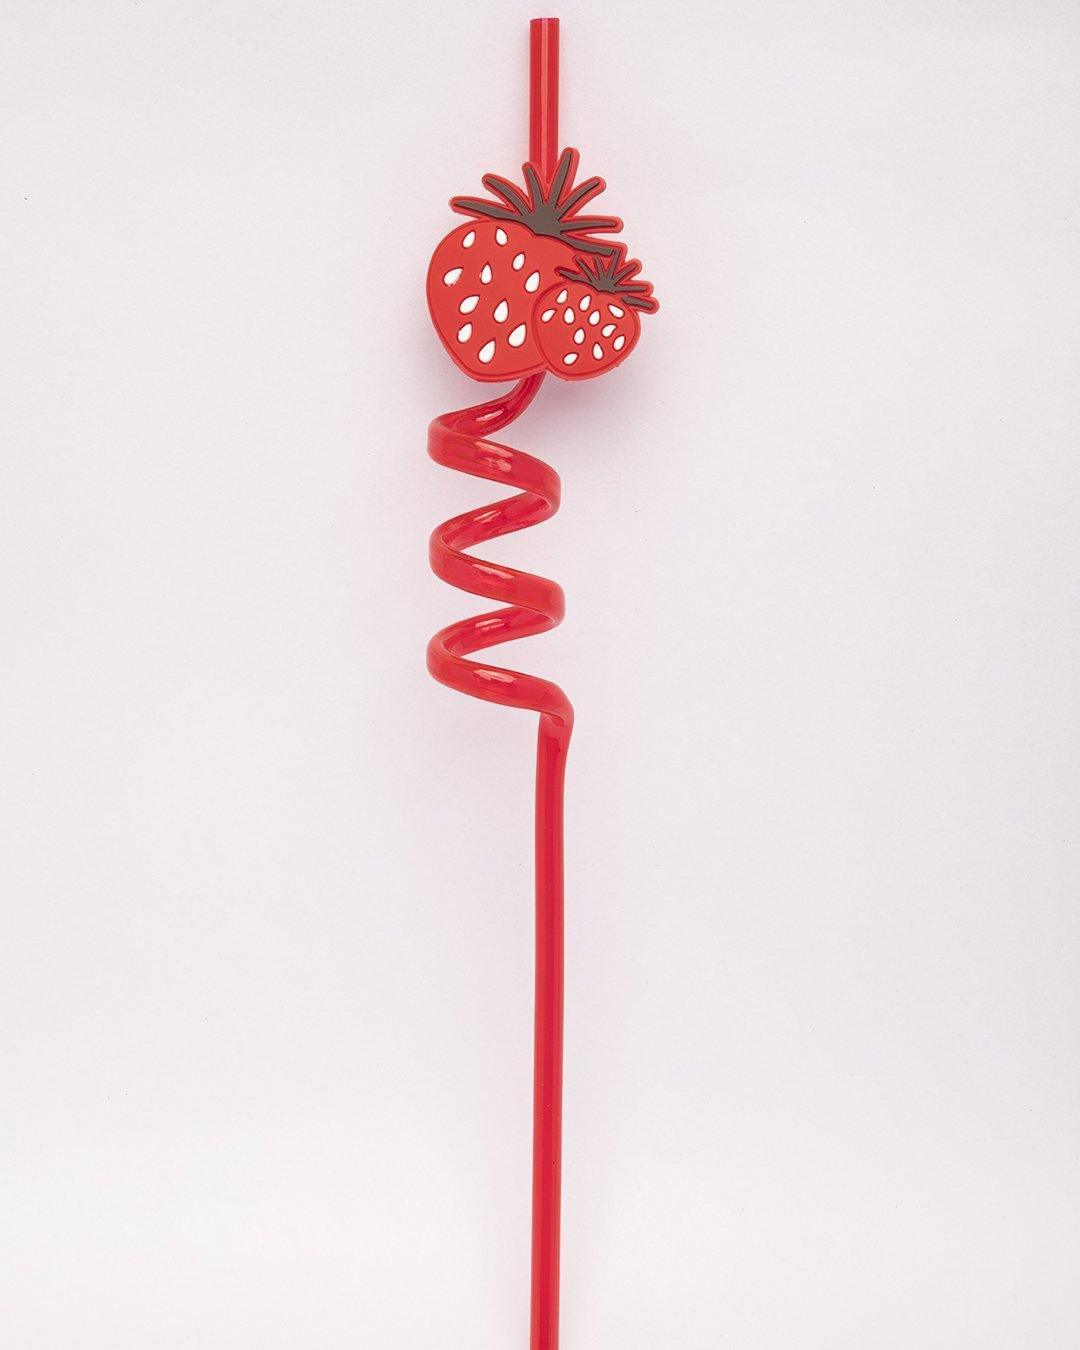 Straw Set, Fruit Design, Multicolour, Plastic, Set of 4 - MARKET 99